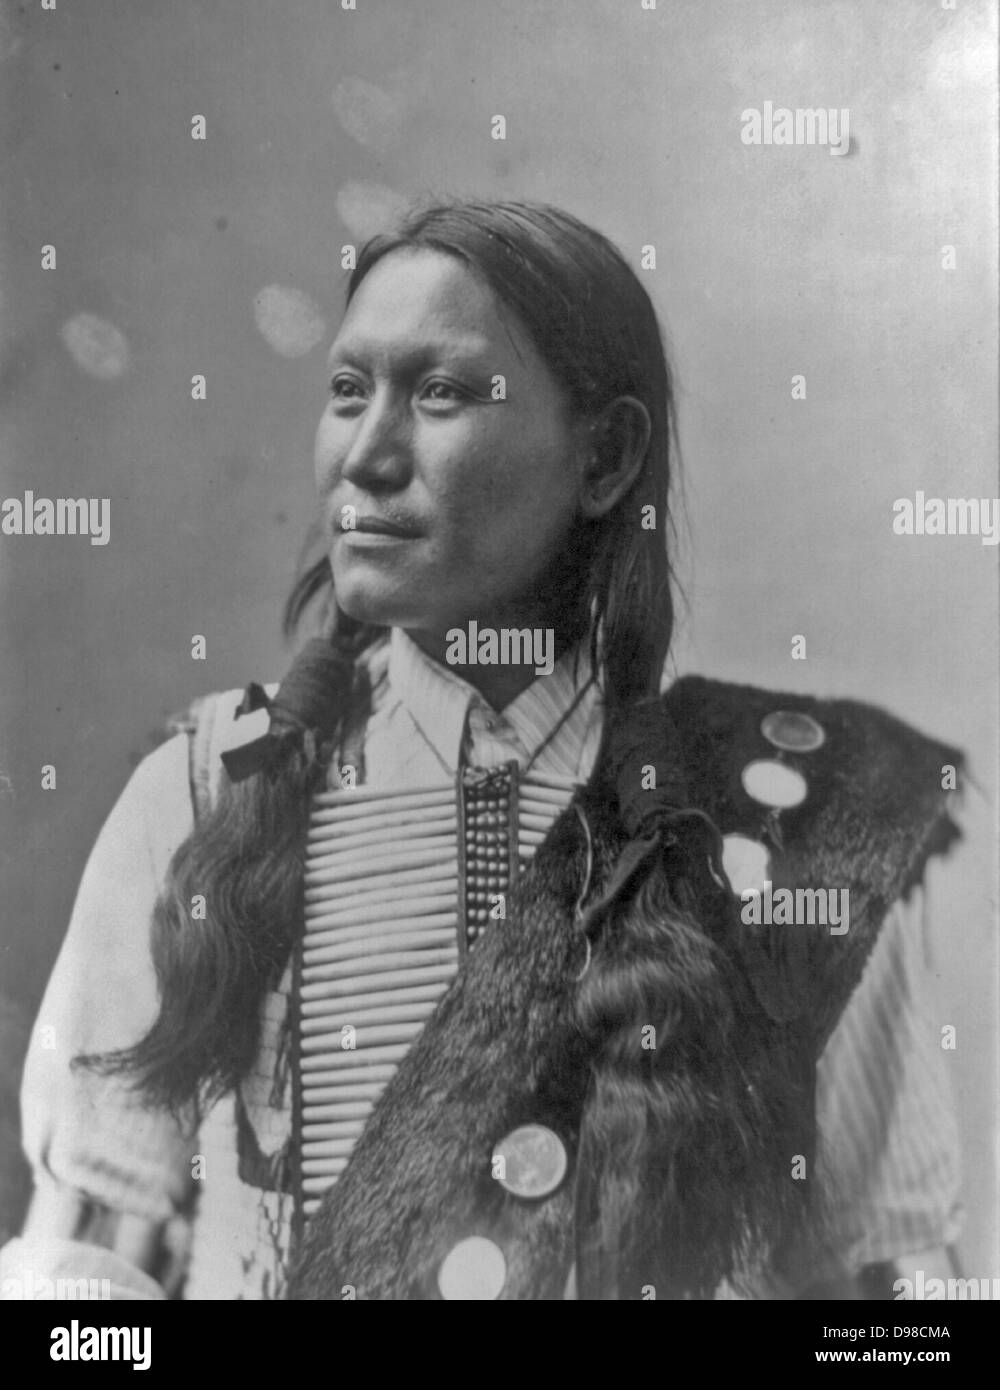 Native American man, half-length portrait by Heyn Photo, c1899. Stock Photo